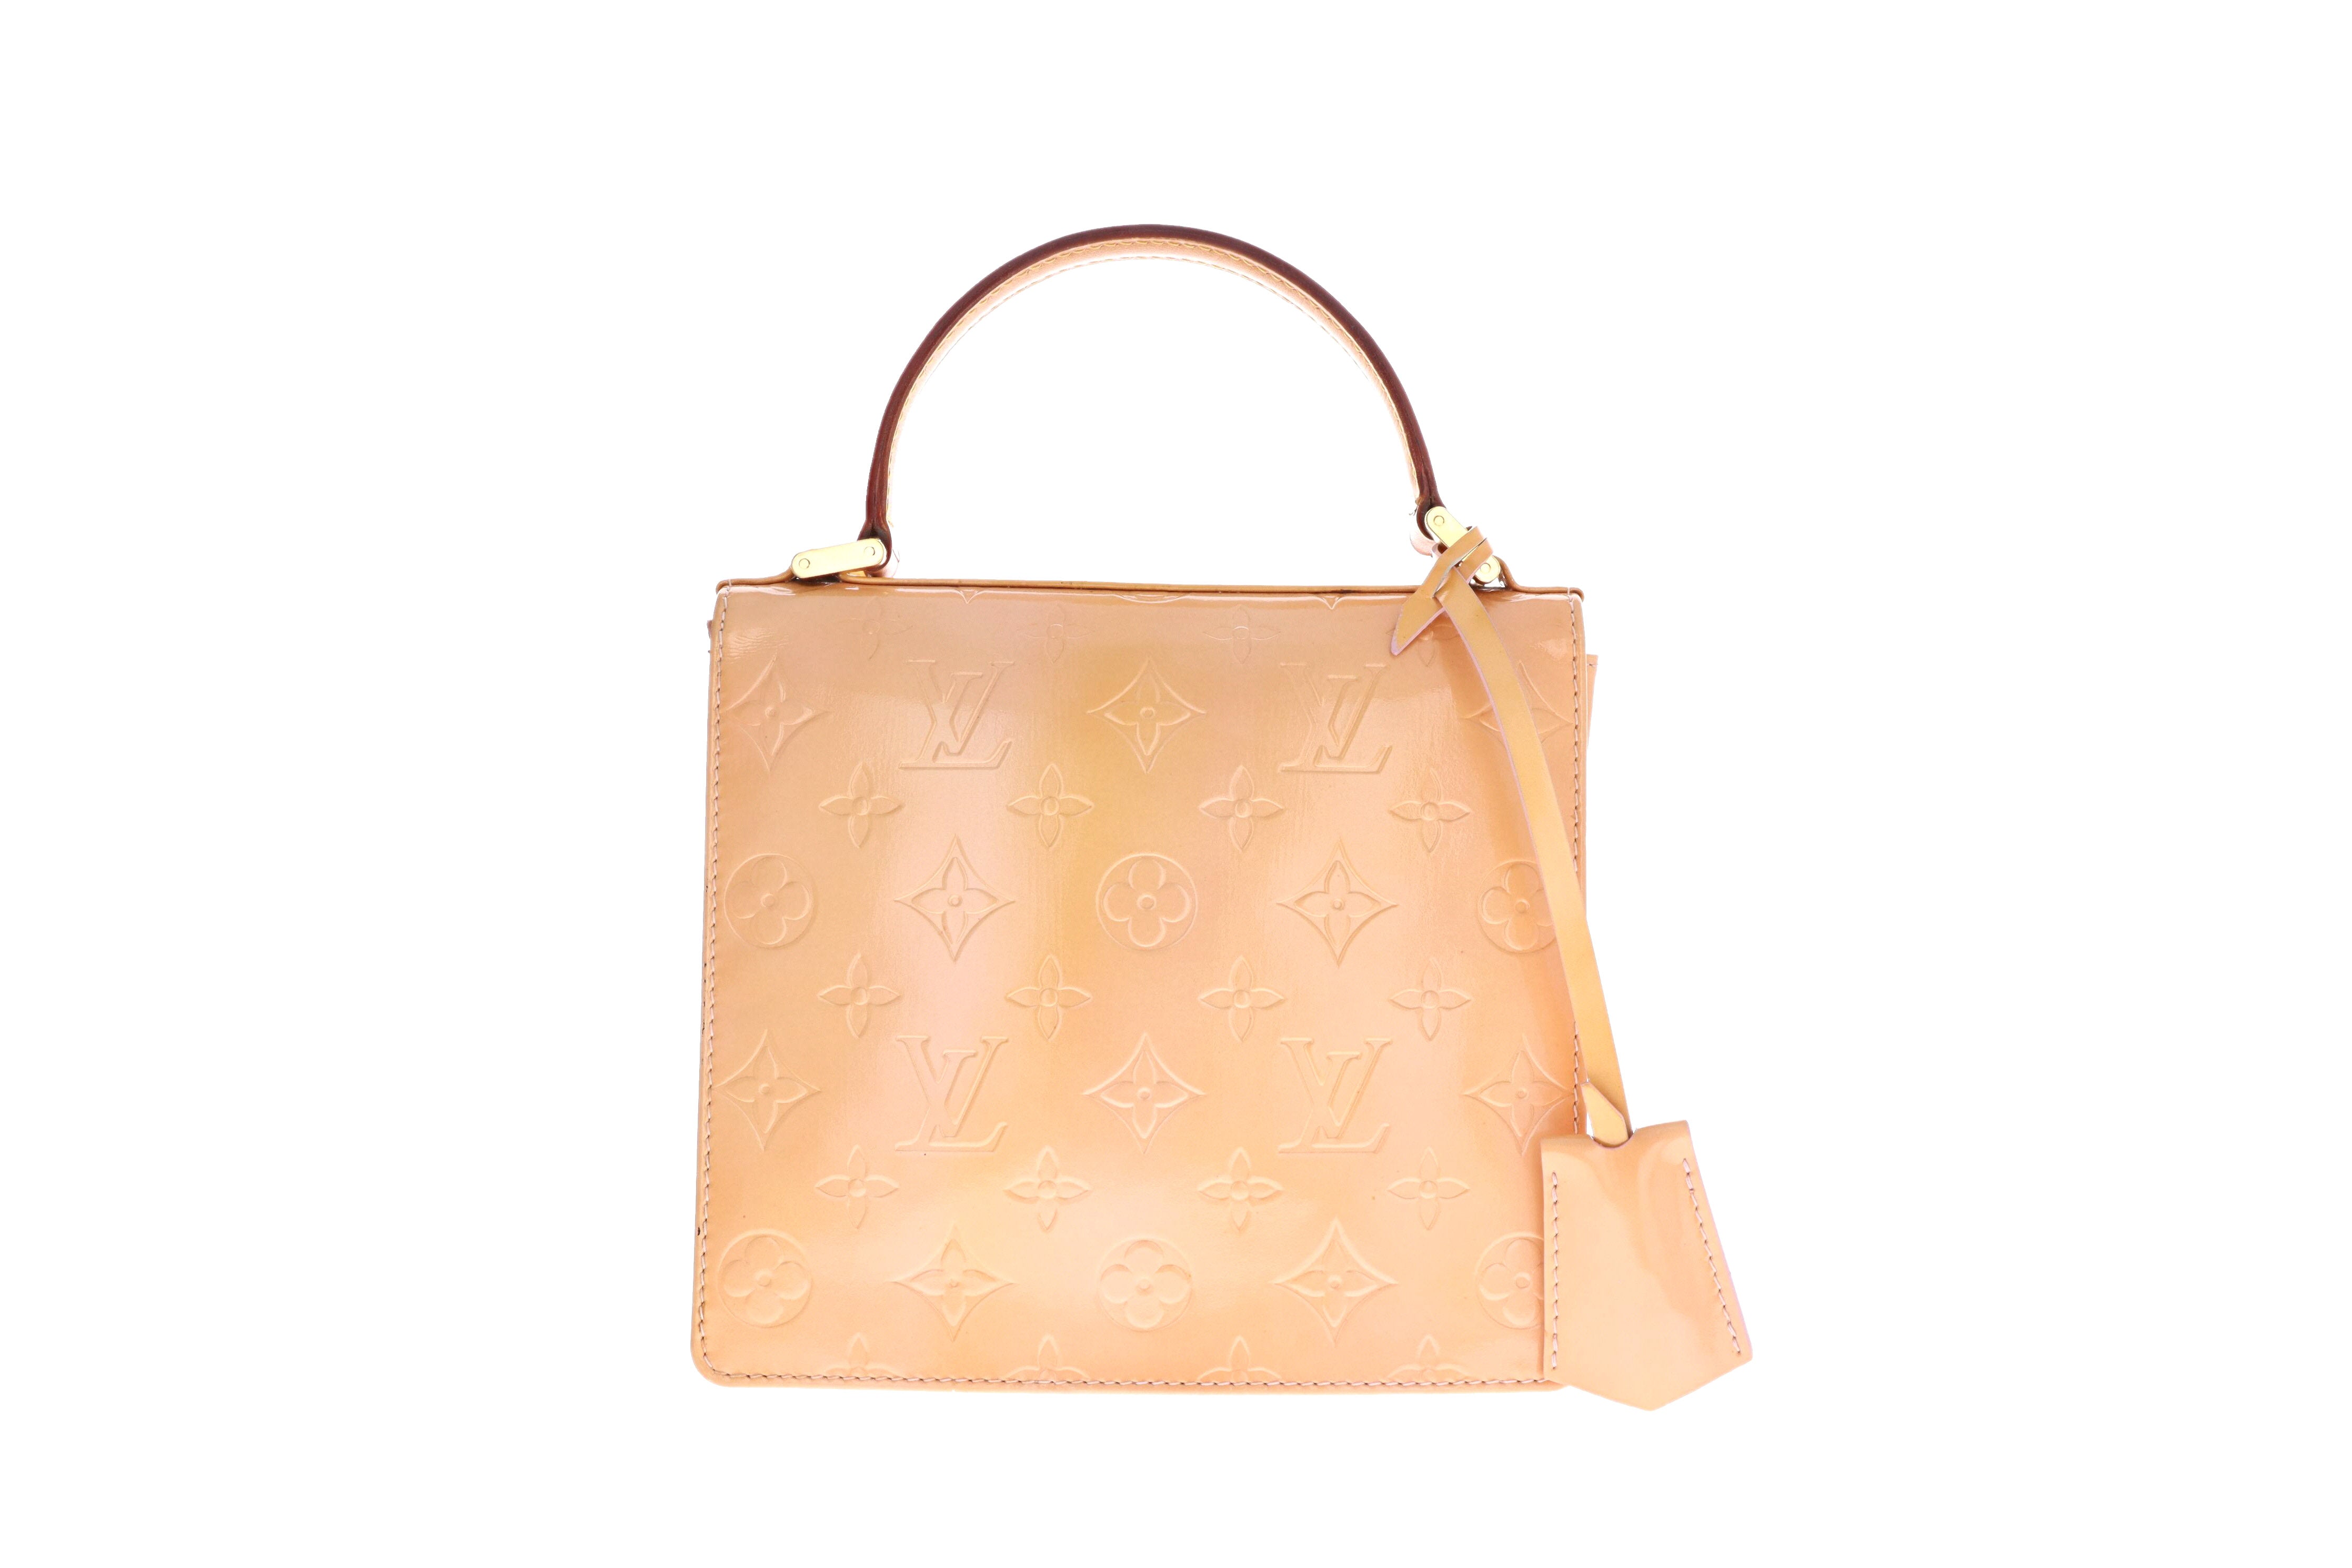 Louis Vuitton Spring Street NM Handbag Monogram Vernis with